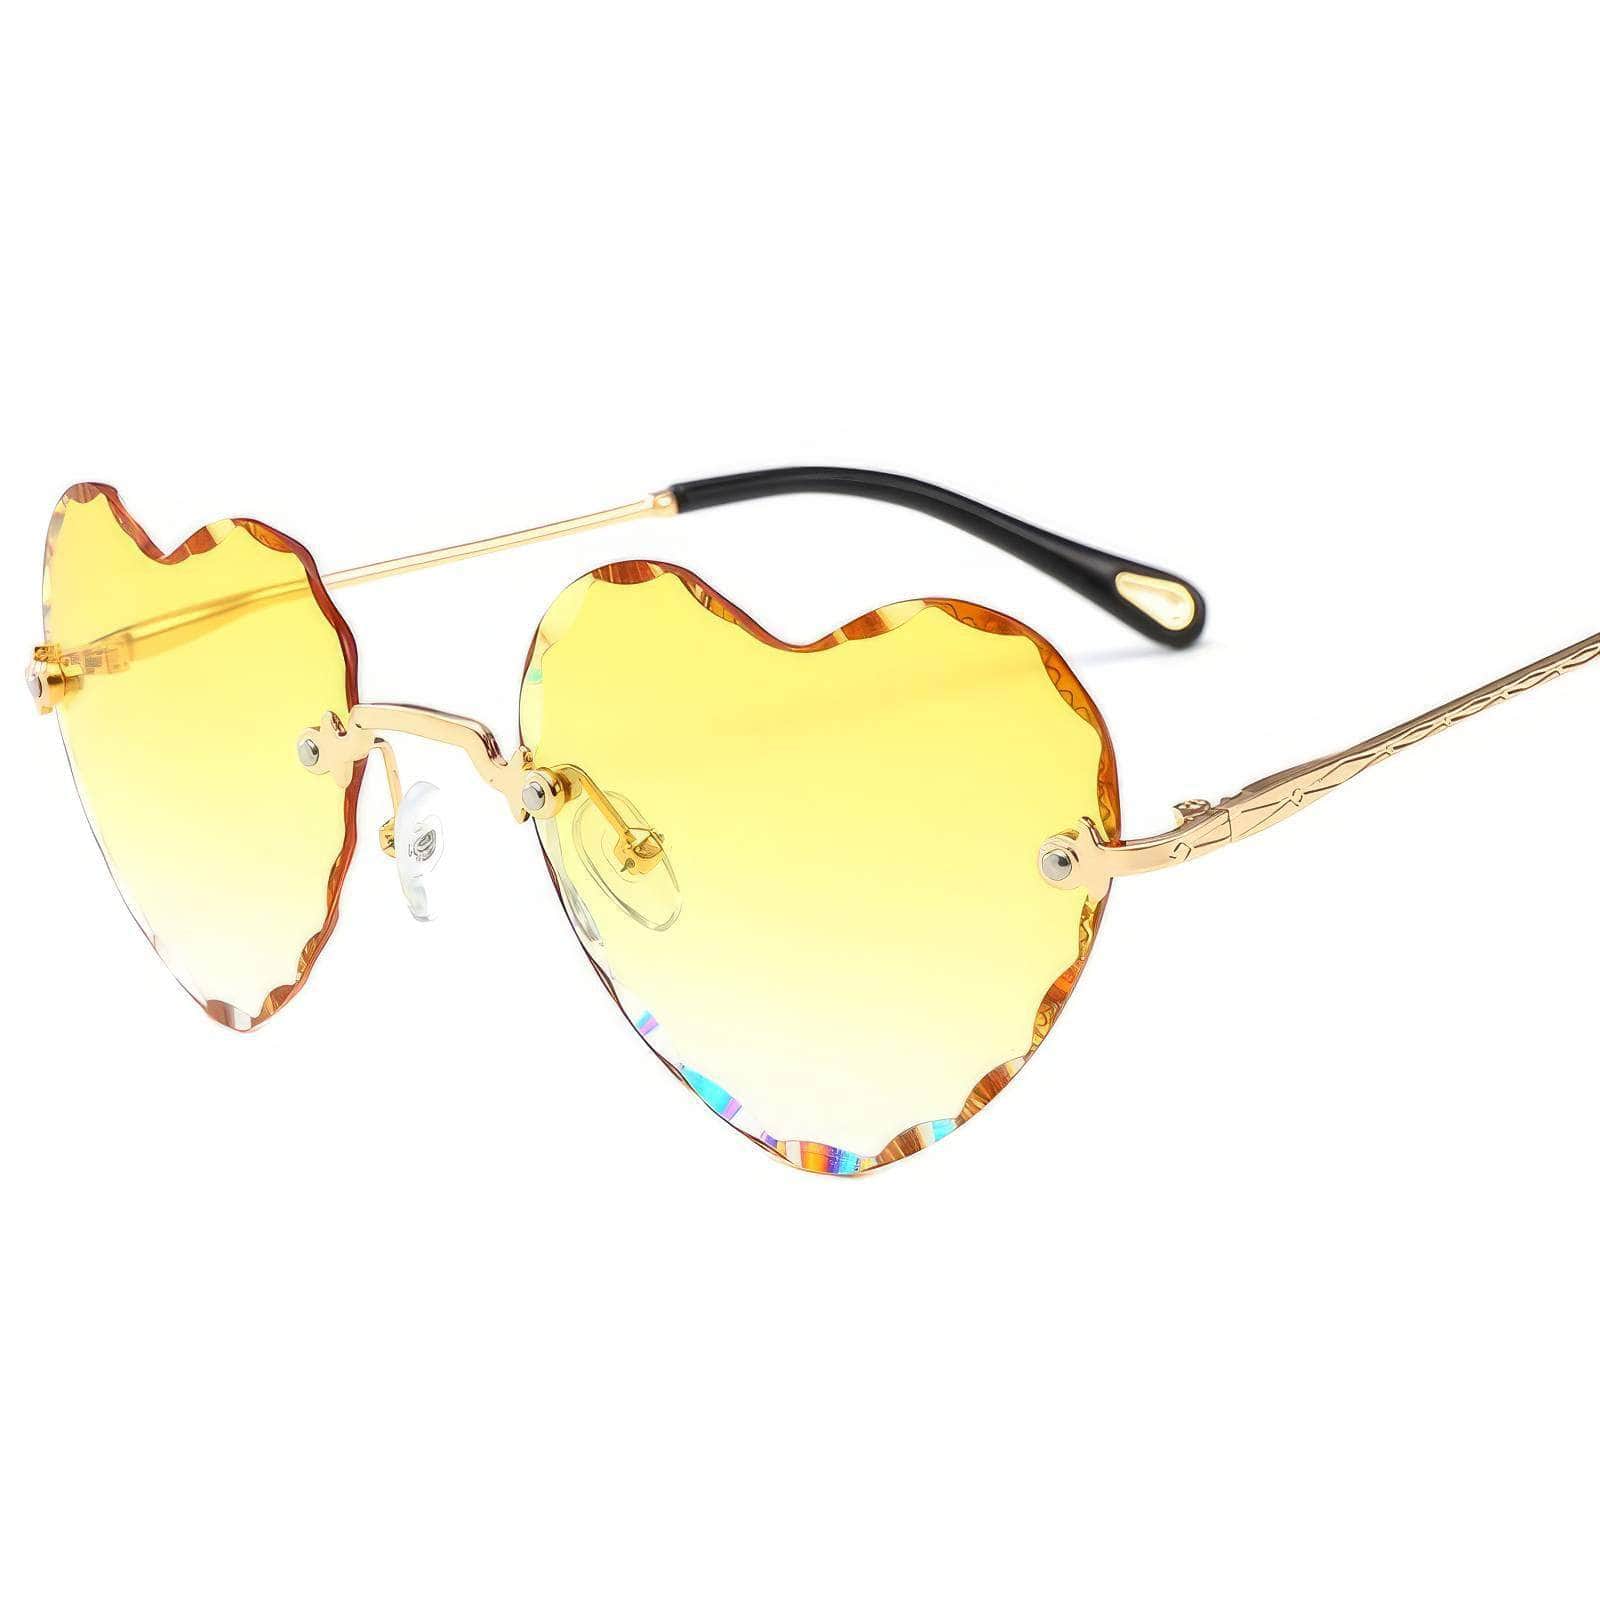 Heart Shaped Sunglasses Yellow/Gold / Resin